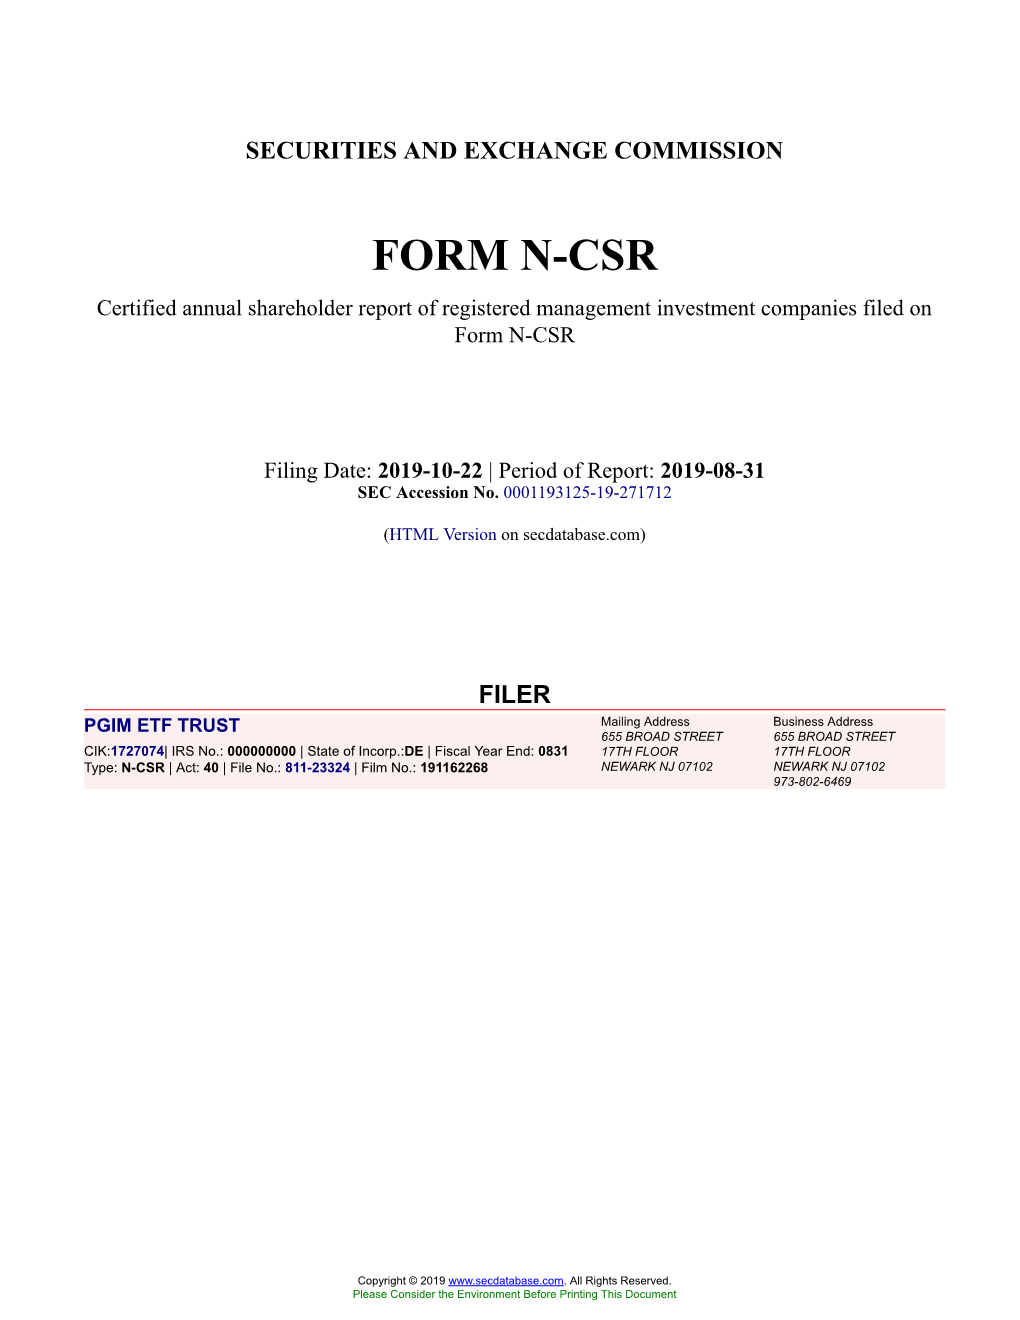 PGIM ETF TRUST Form N-CSR Filed 2019-10-22